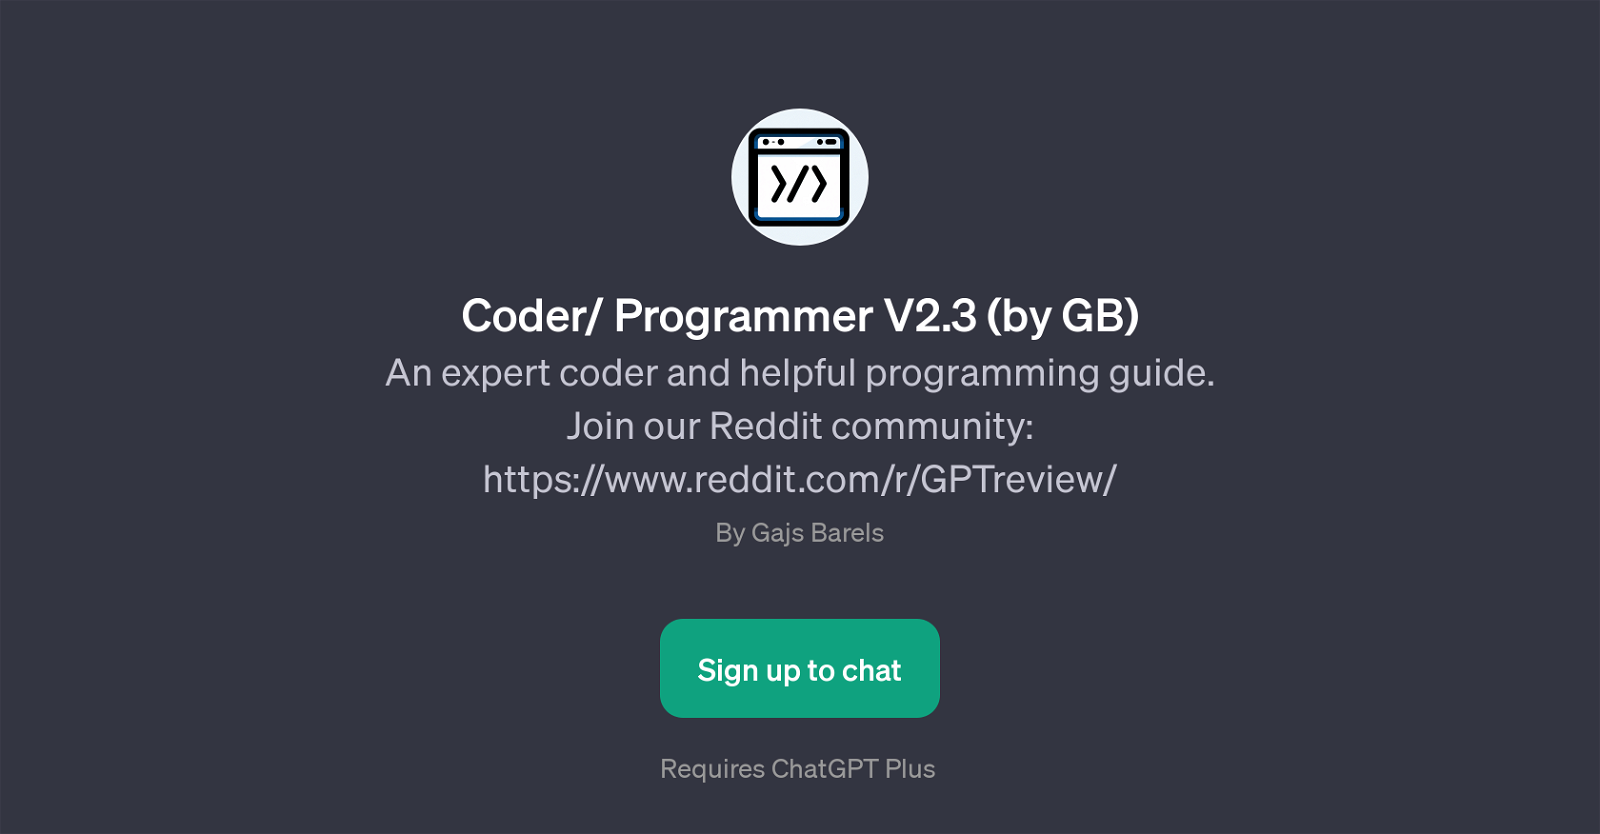 Coder/ Programmer V2.3 (by GB) website